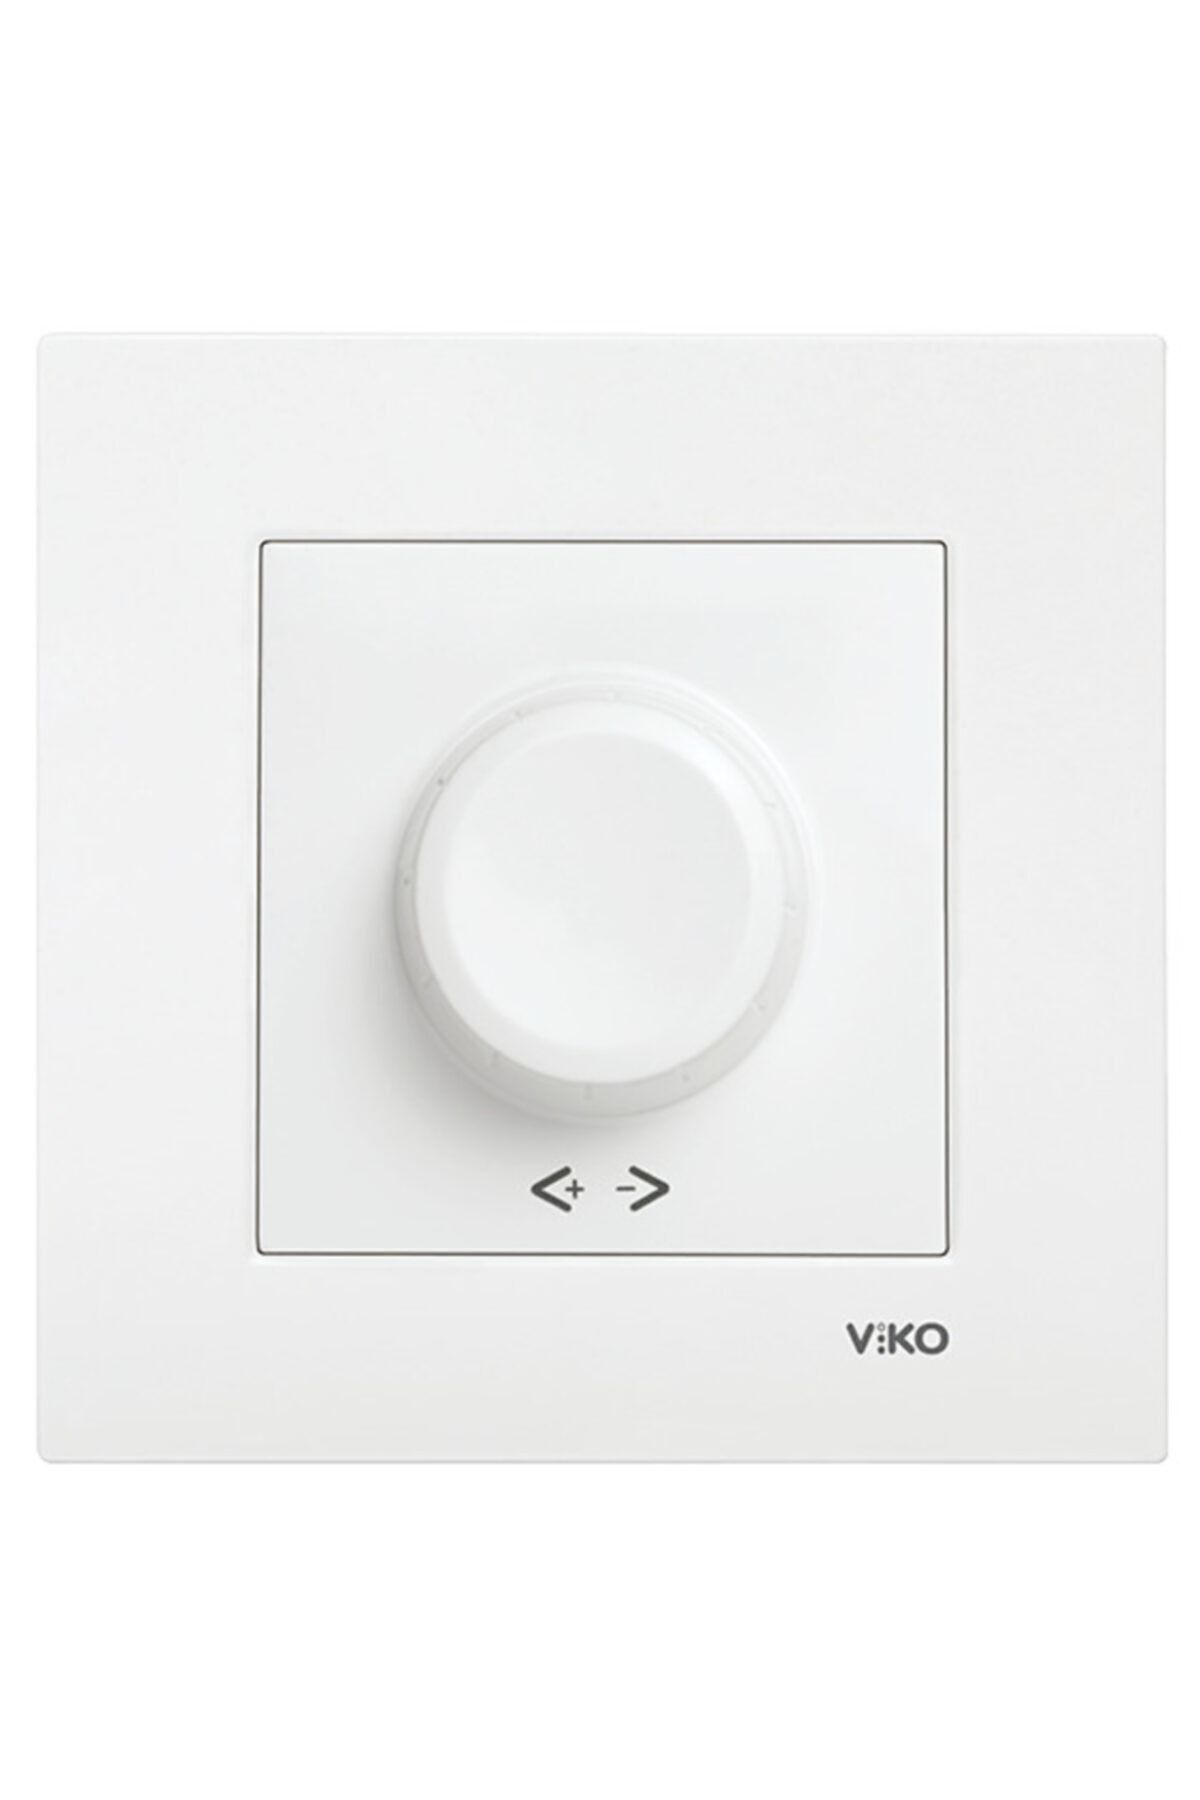 VİKO Karre Pro Dimmer Rl 6-100w Vaiven (LED DİMMER) Beyaz